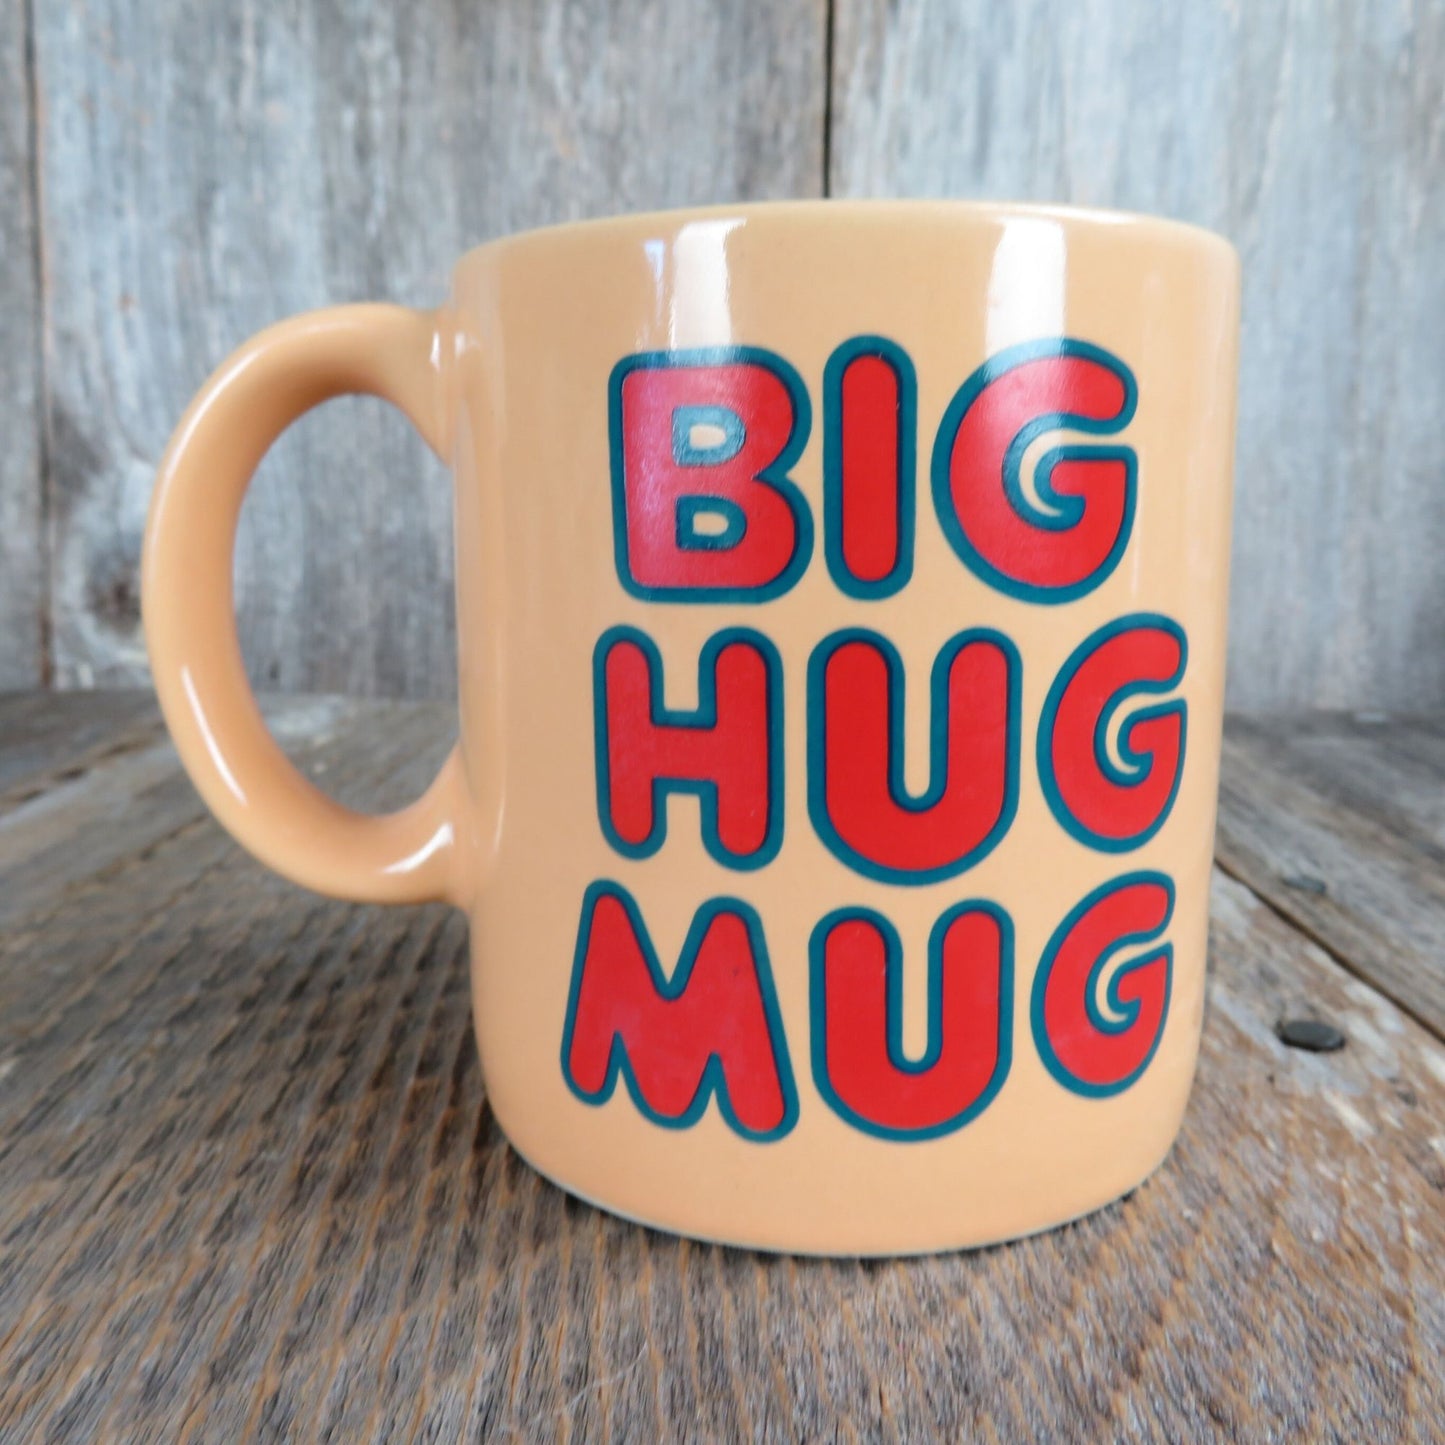 Big Hug Mug Coffee Cup Orange Red FTD Especially For You Tea Cup Made in Korea